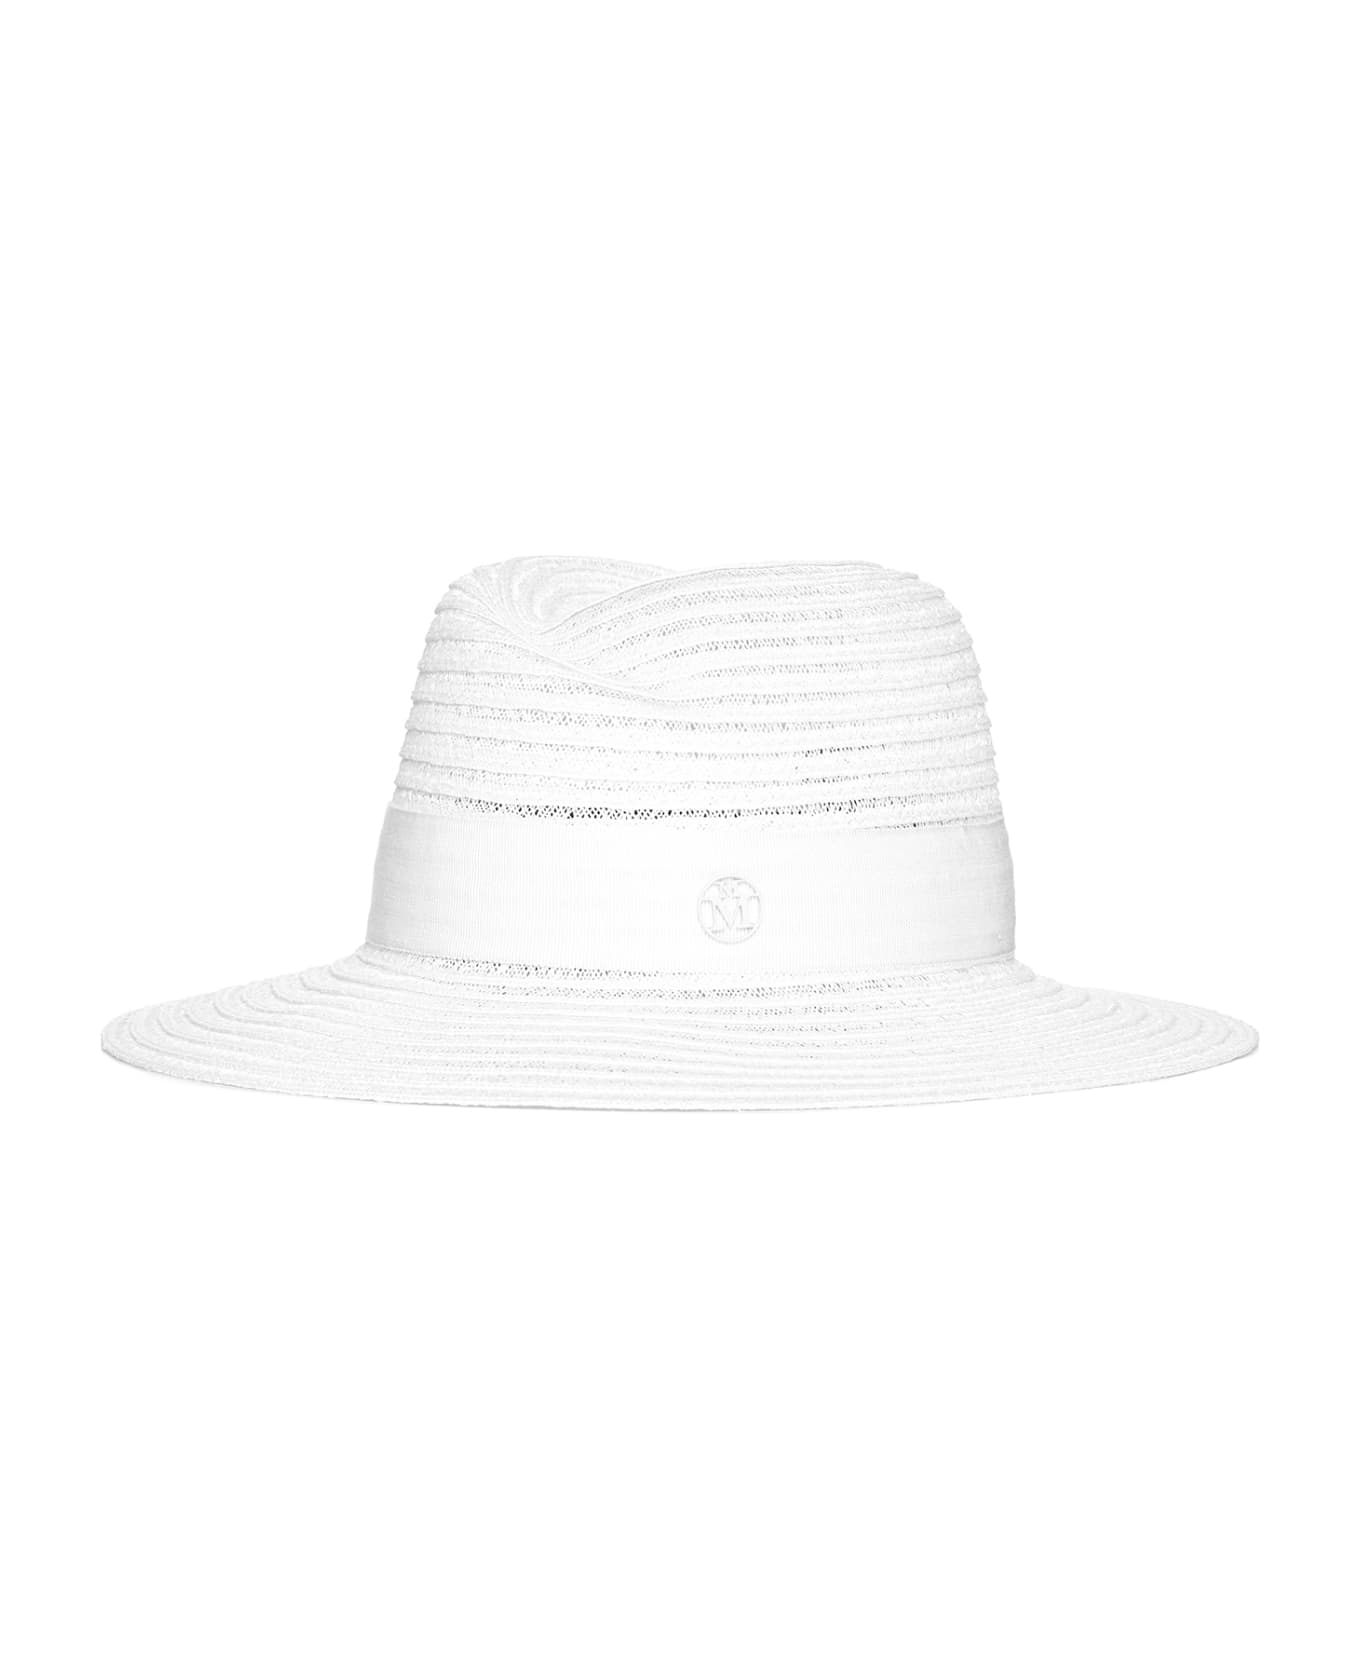 Maison Michel Hat - White